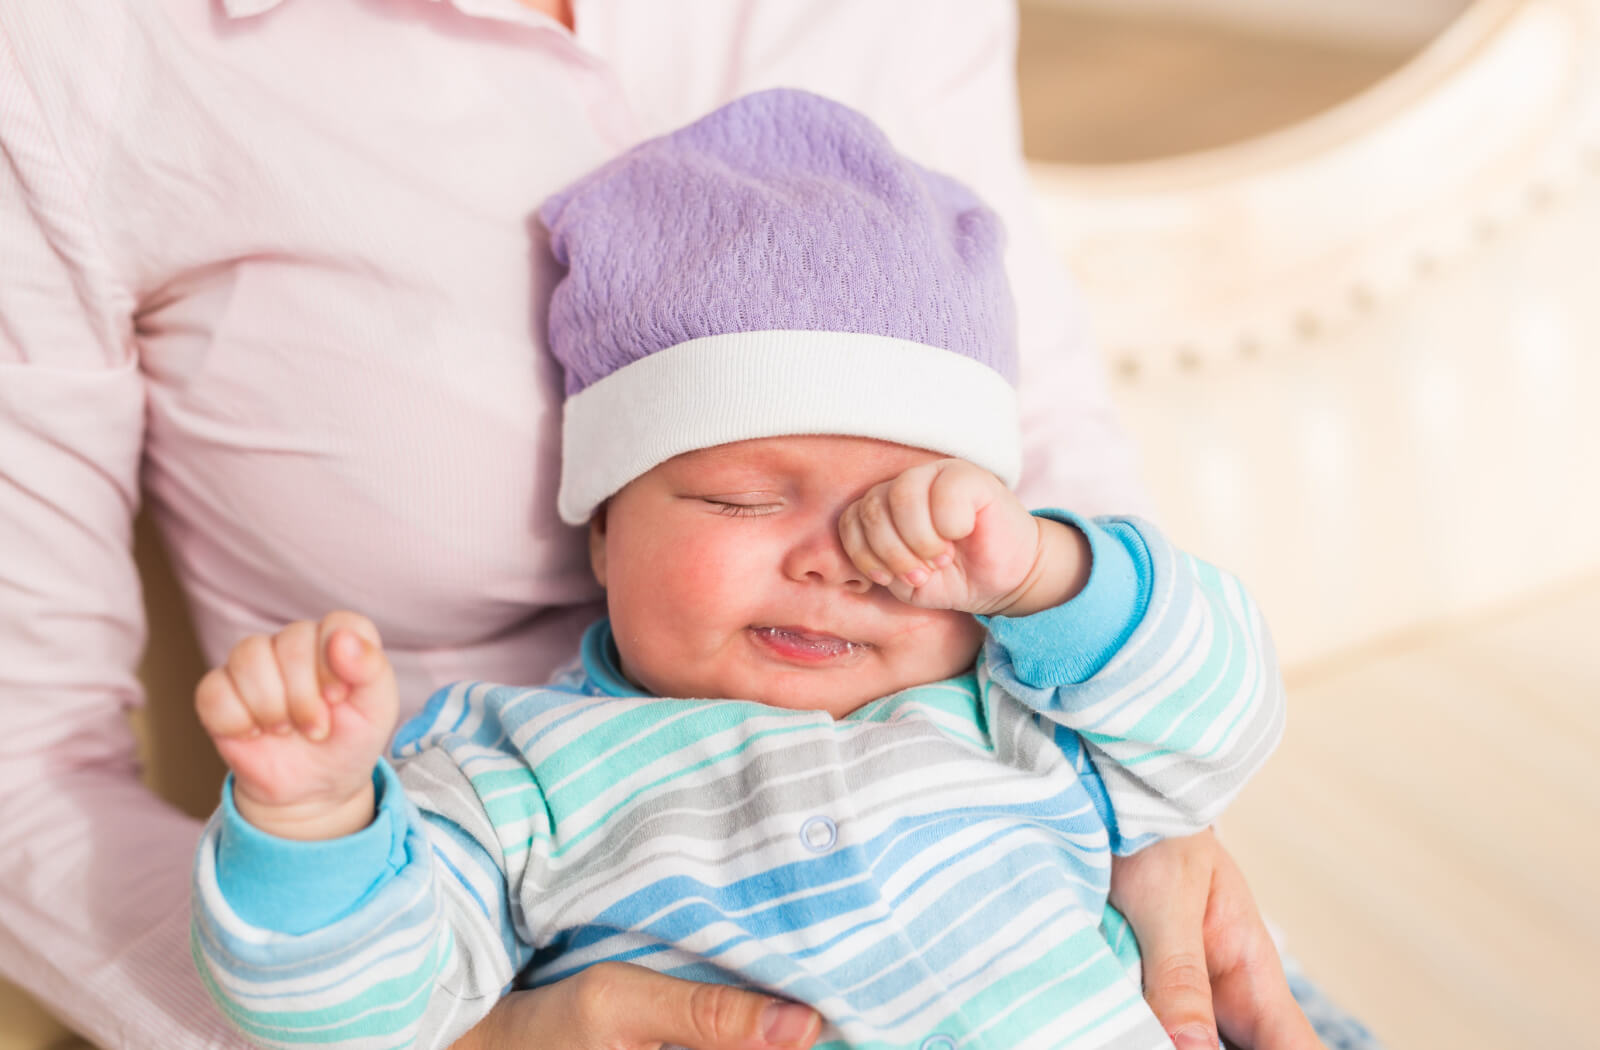 A newborn baby in striped pyjamas rubbing their eye.